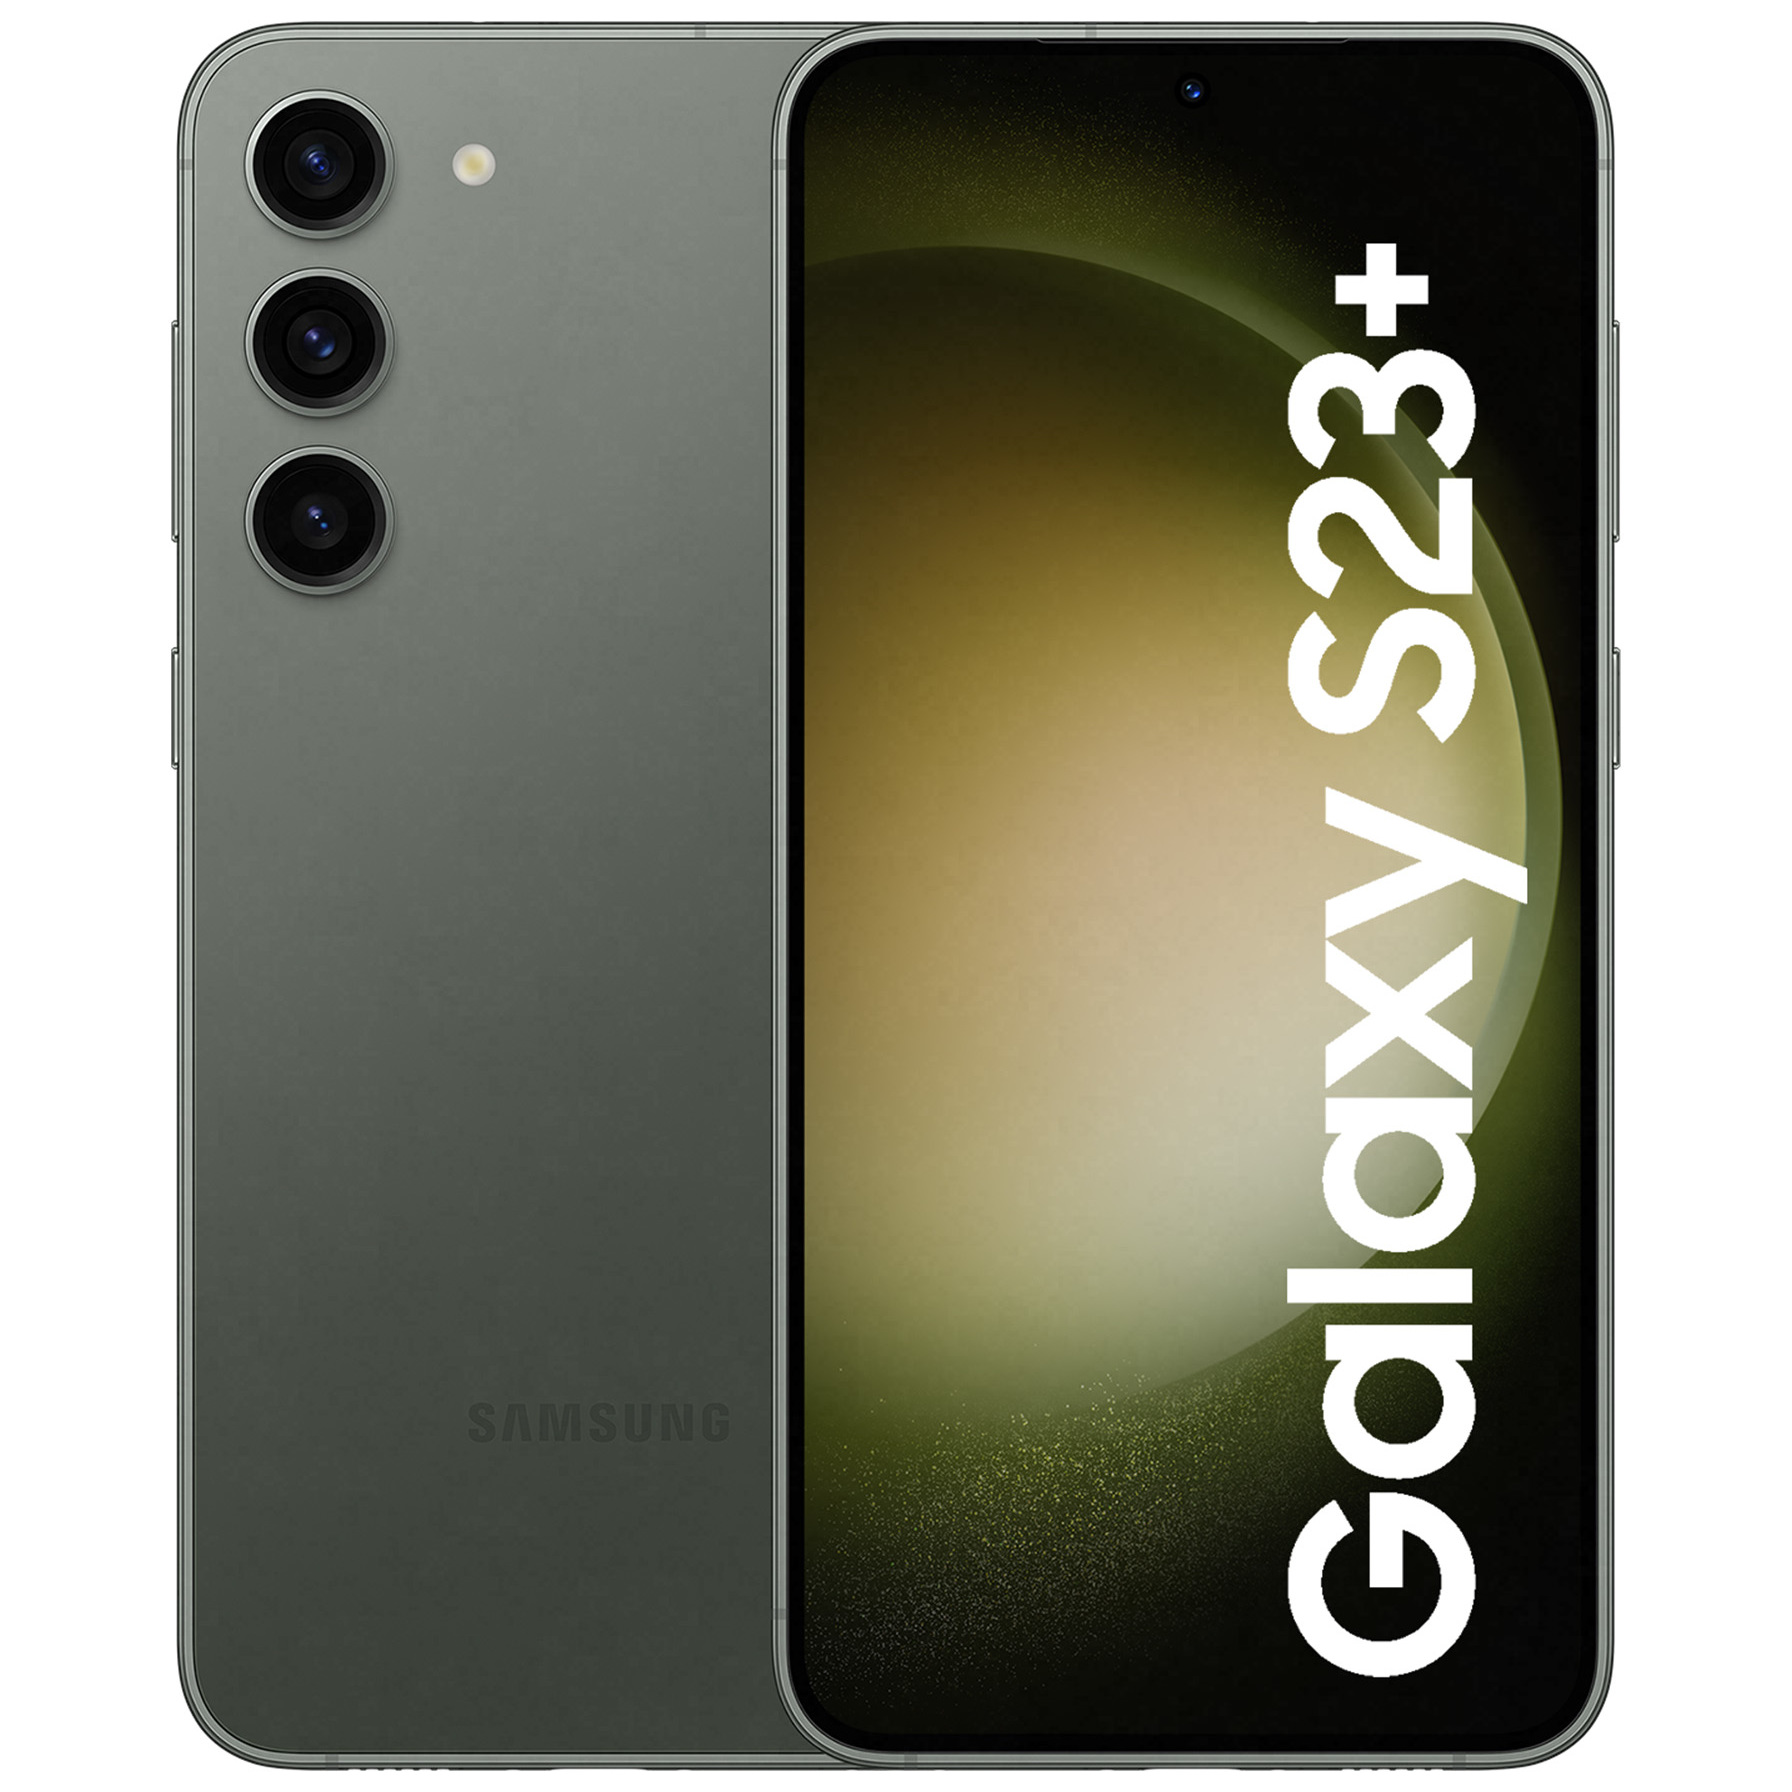 Samsung Galaxy S23+, View Specs